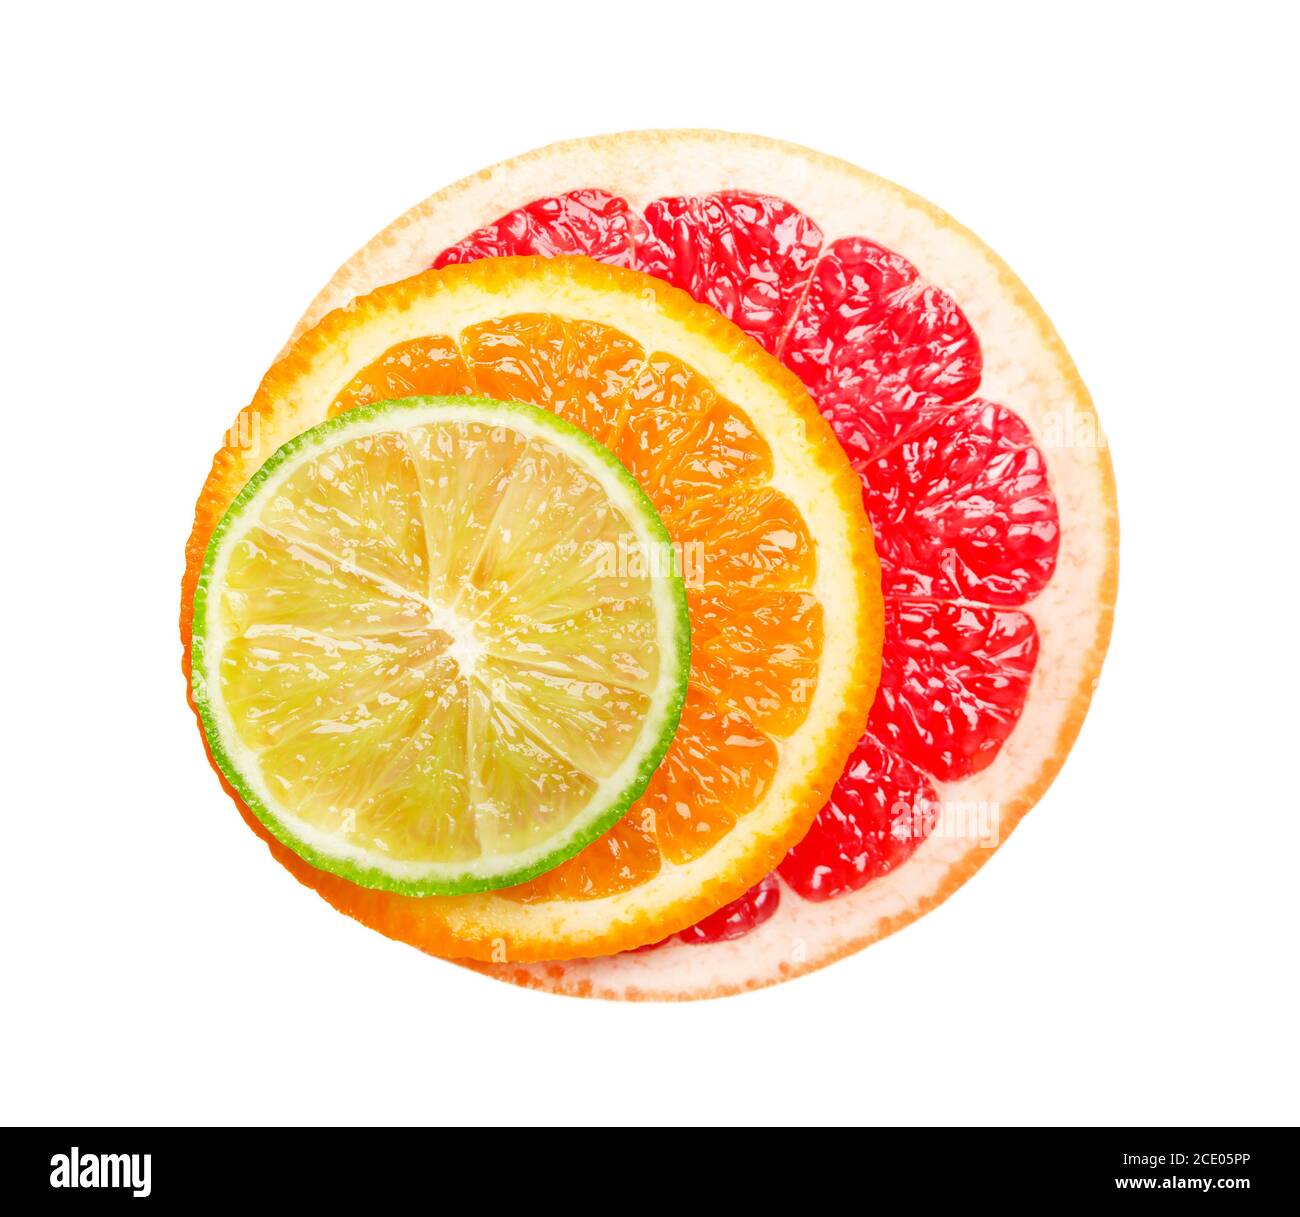 Grapefruit, orange and lime isolated on white background. Round slice of juicy and fresh grapefruit, orange and lime. With clipp Stock Photo